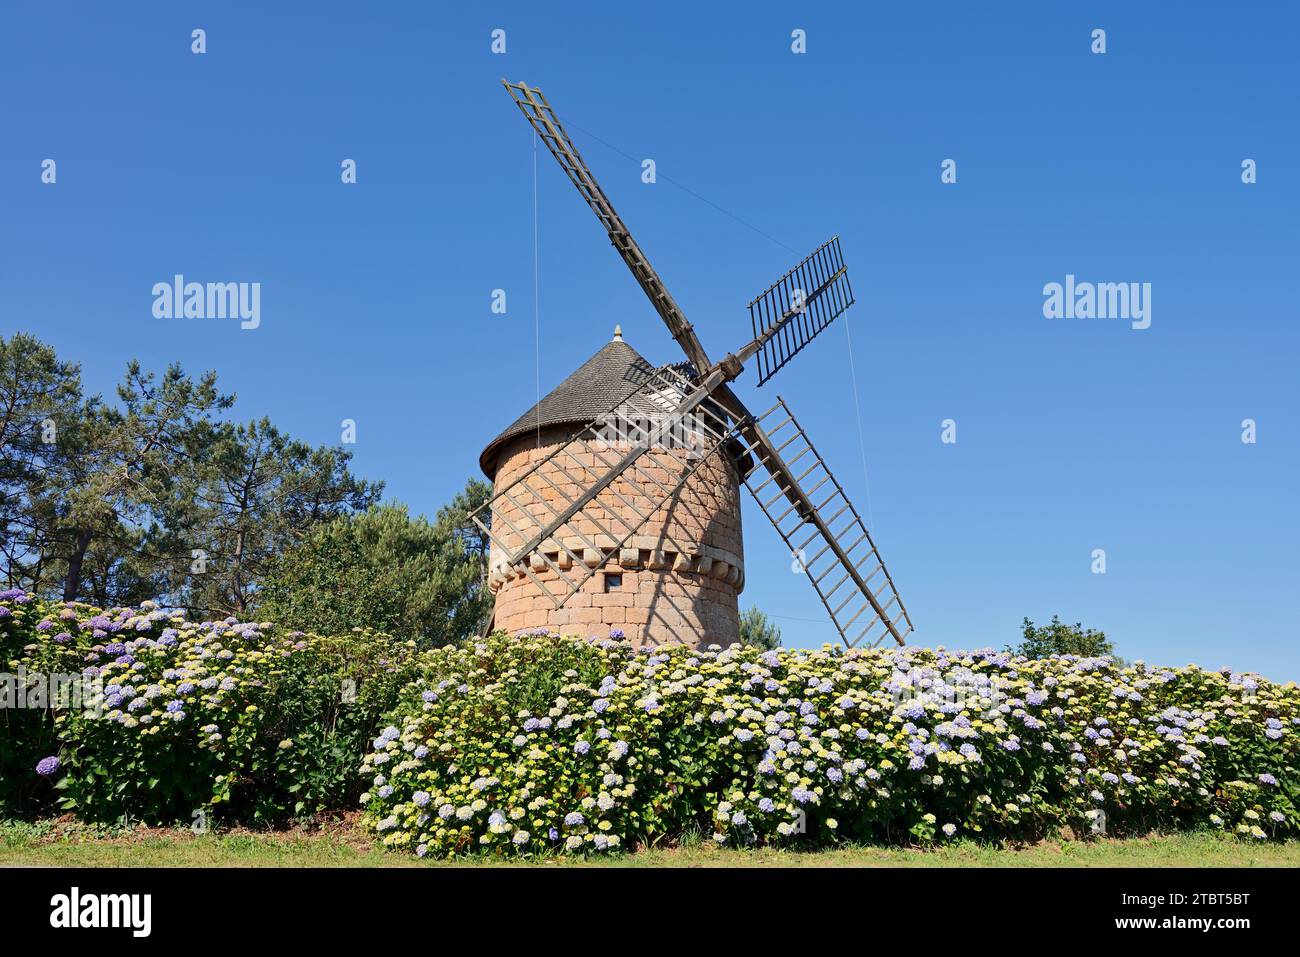 Ortensie da giardino in fiore di fronte al mulino a vento le Moulin a Vent de la Lande du CRACa'h, Perros-Guirec, Cotes-d'Armor, Bretagna, Francia Foto Stock